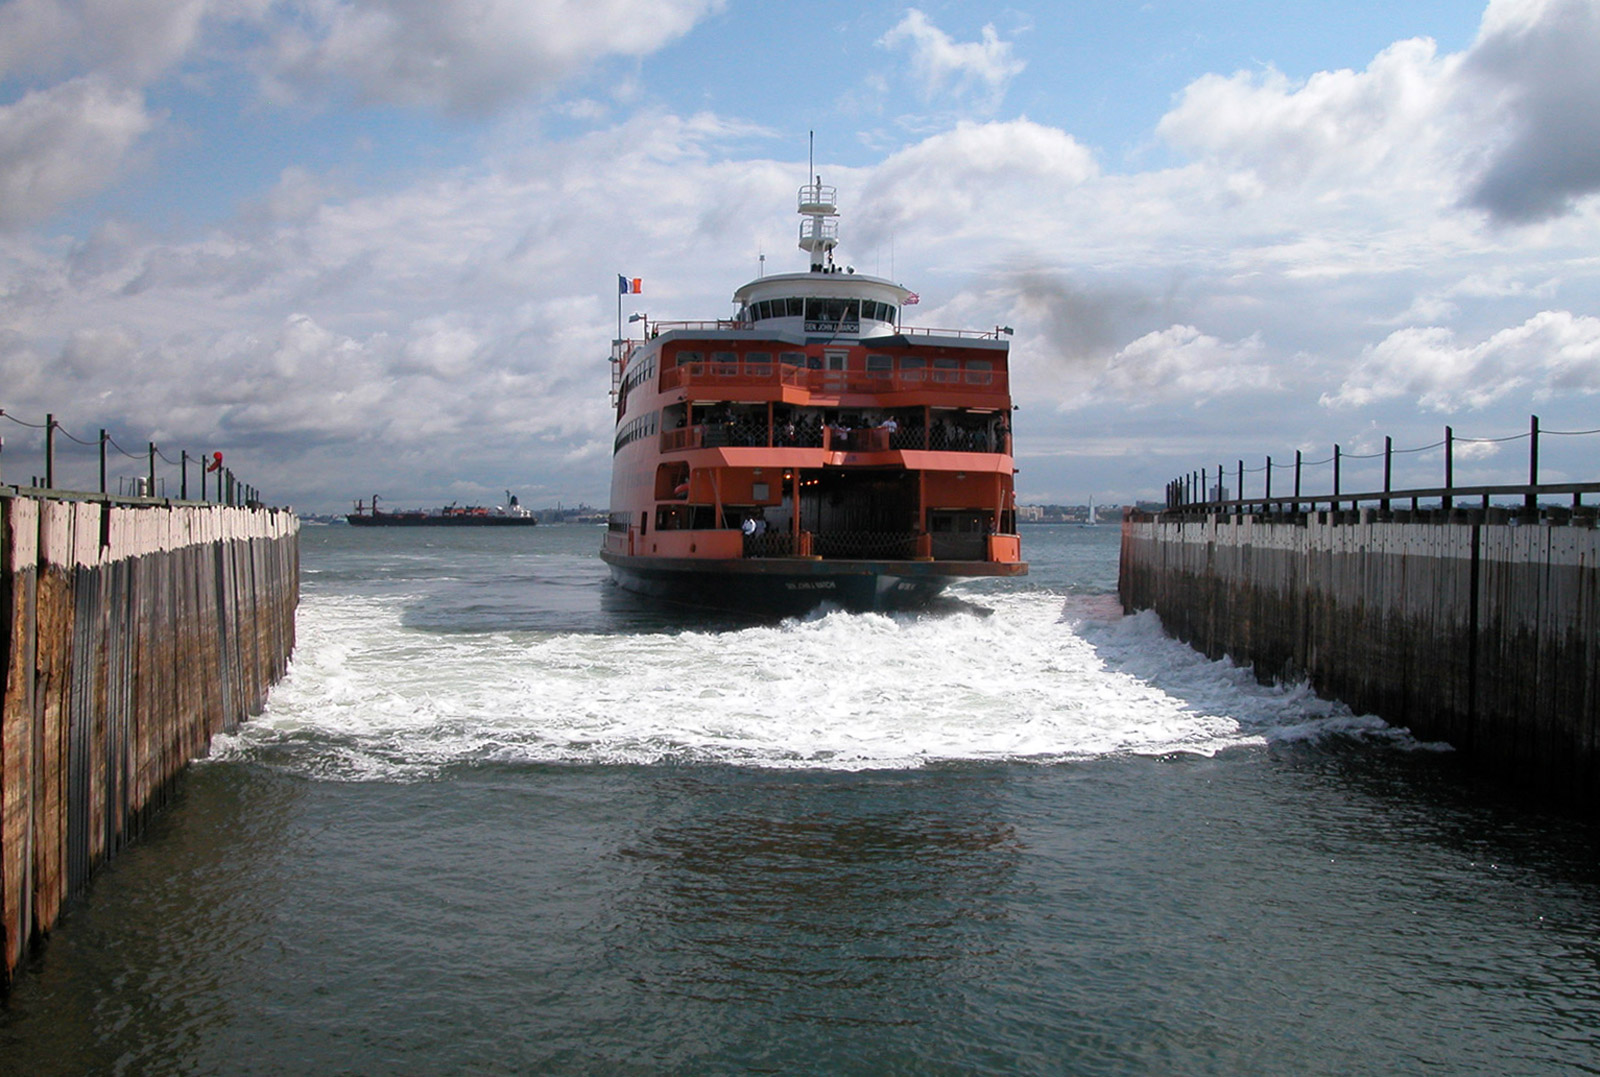 The Staten Island Ferry John J. Marchi leaving the St. George, Staten Island dock.